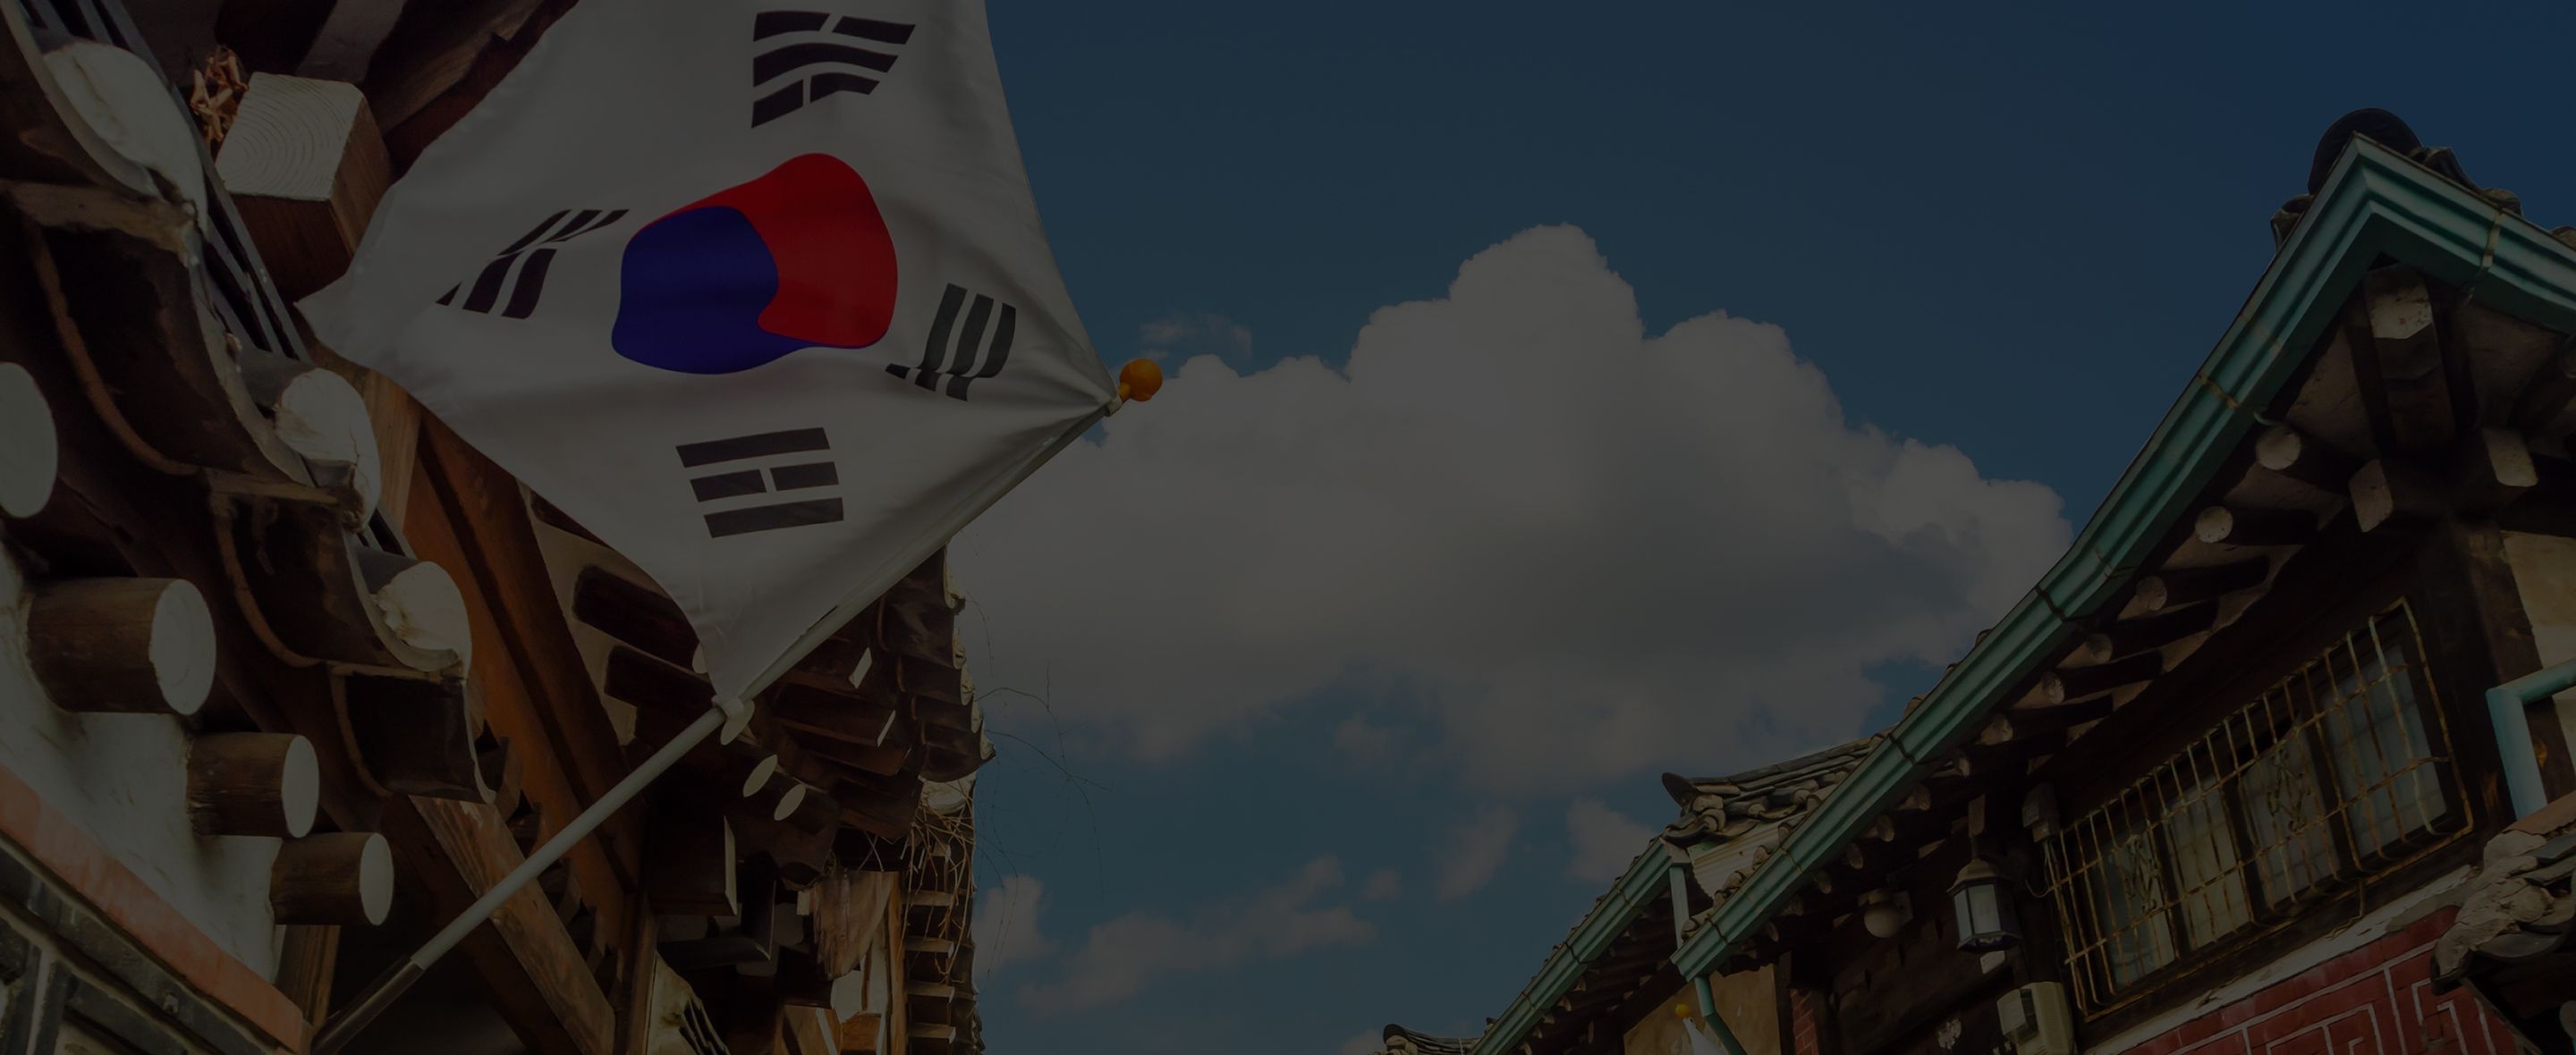 South Korea - Header.jpg